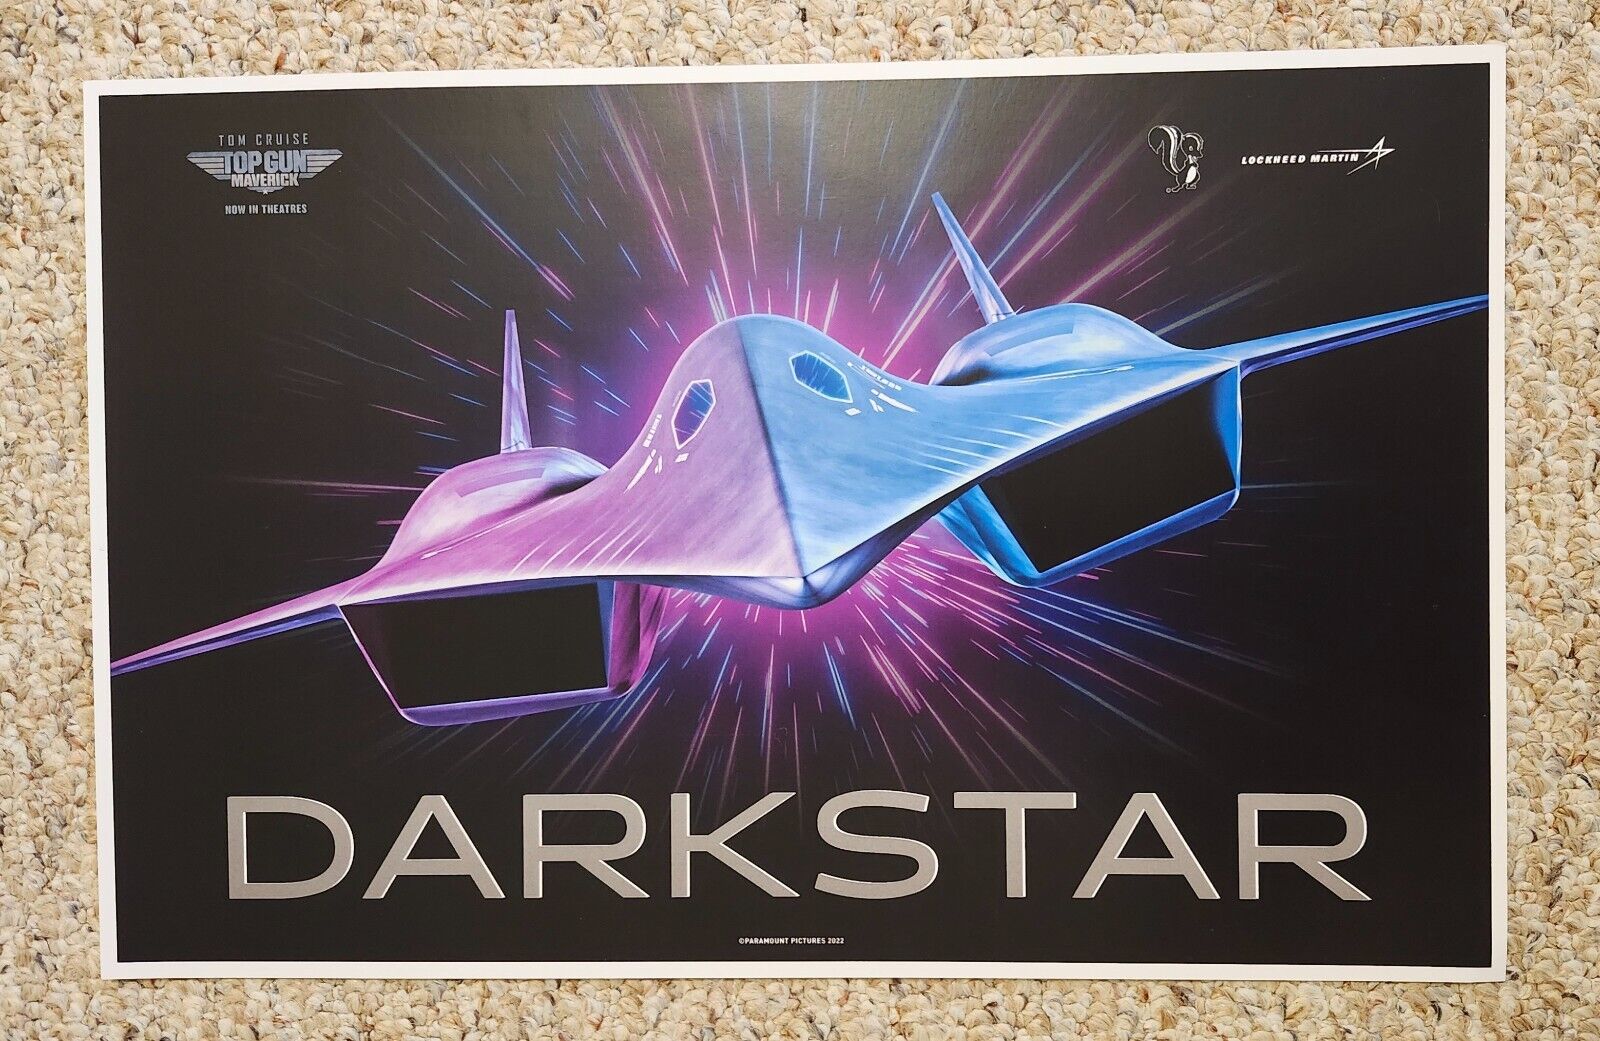 Top Gun Maverick Darkstar Aircraft Poster Lockheed Martin Skunkworks Tom Cruise Без бренда